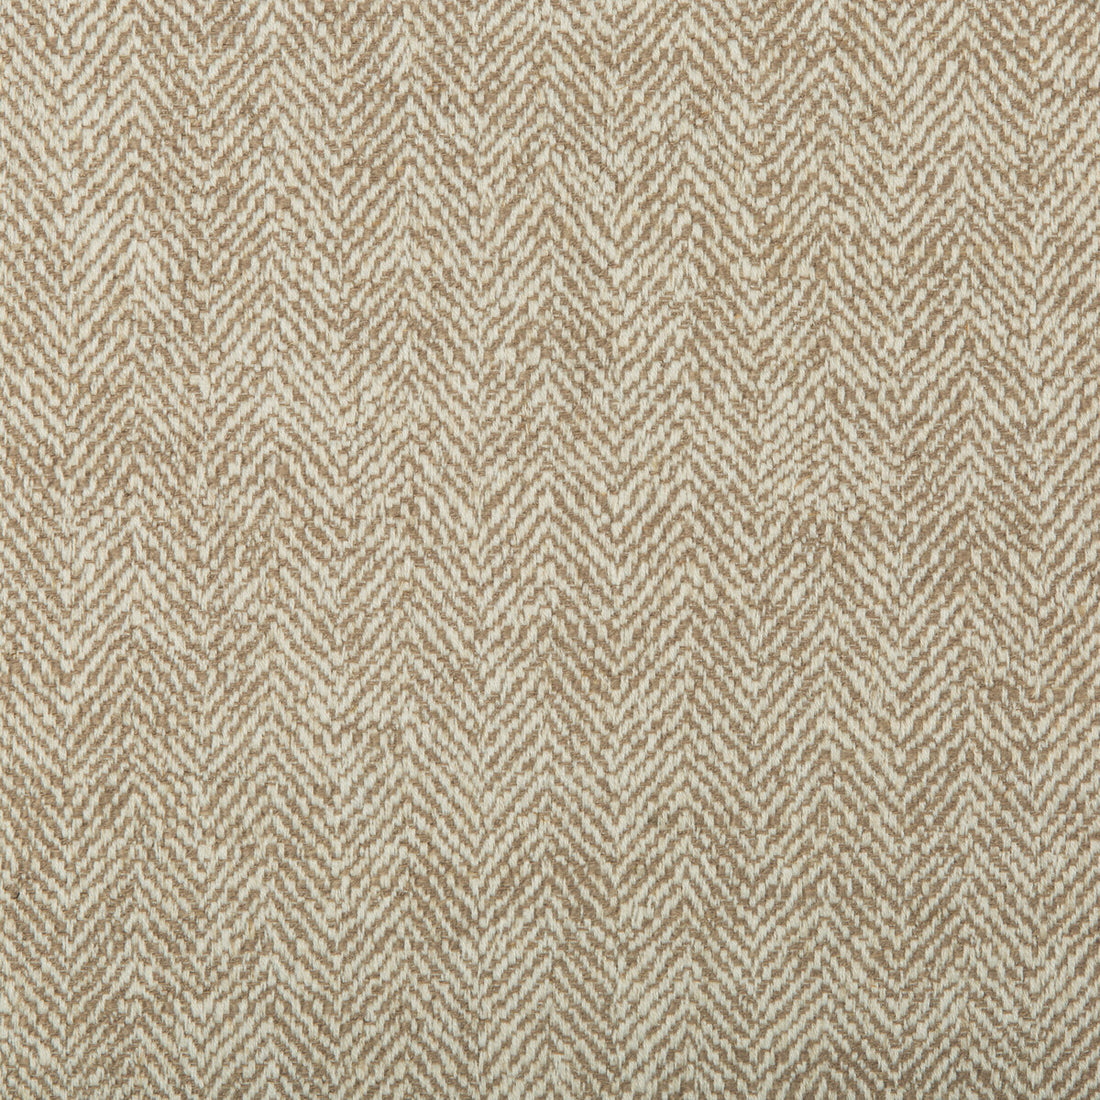 Kravet Smart fabric in 35228-106 color - pattern 35228.106.0 - by Kravet Smart in the Performance Kravetarmor collection